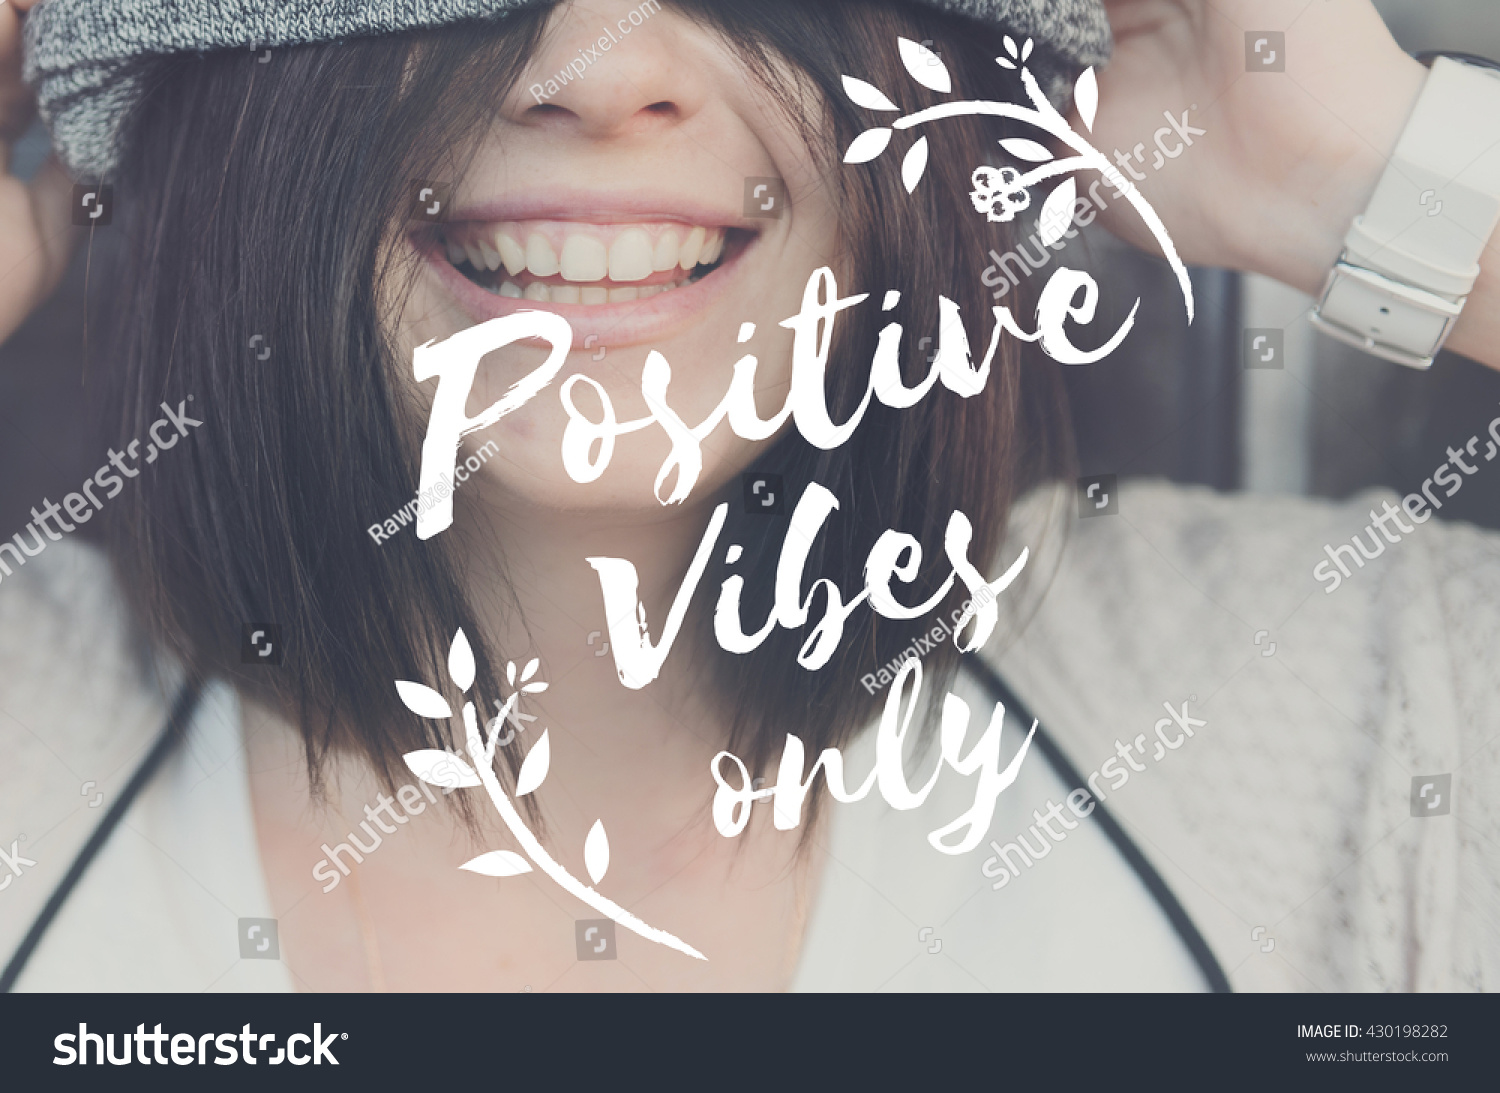 Positive Attitude Motivation Inspiration Thinking Concept #430198282